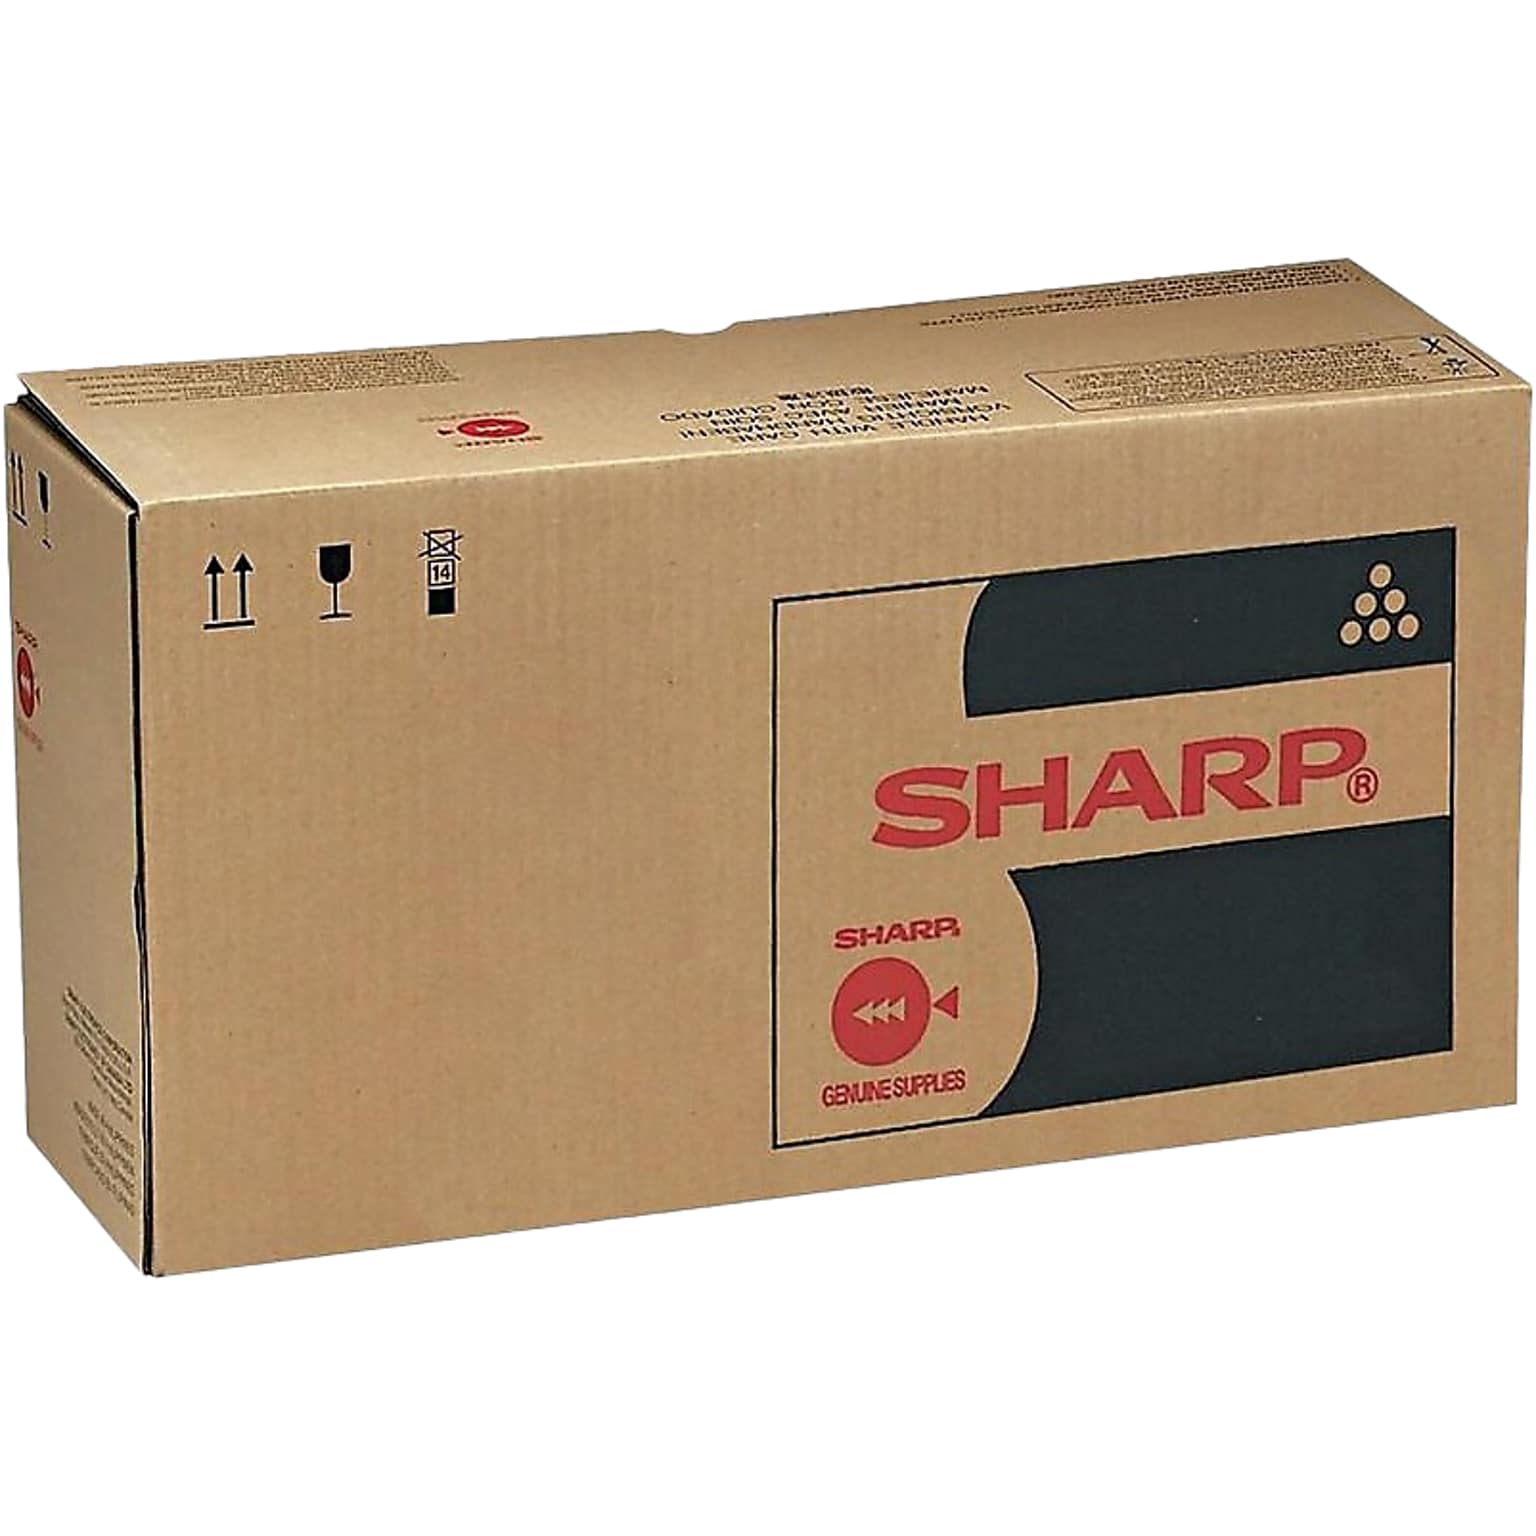 Sharp MX-C30NT-B Black Standard Yield Toner Cartridge